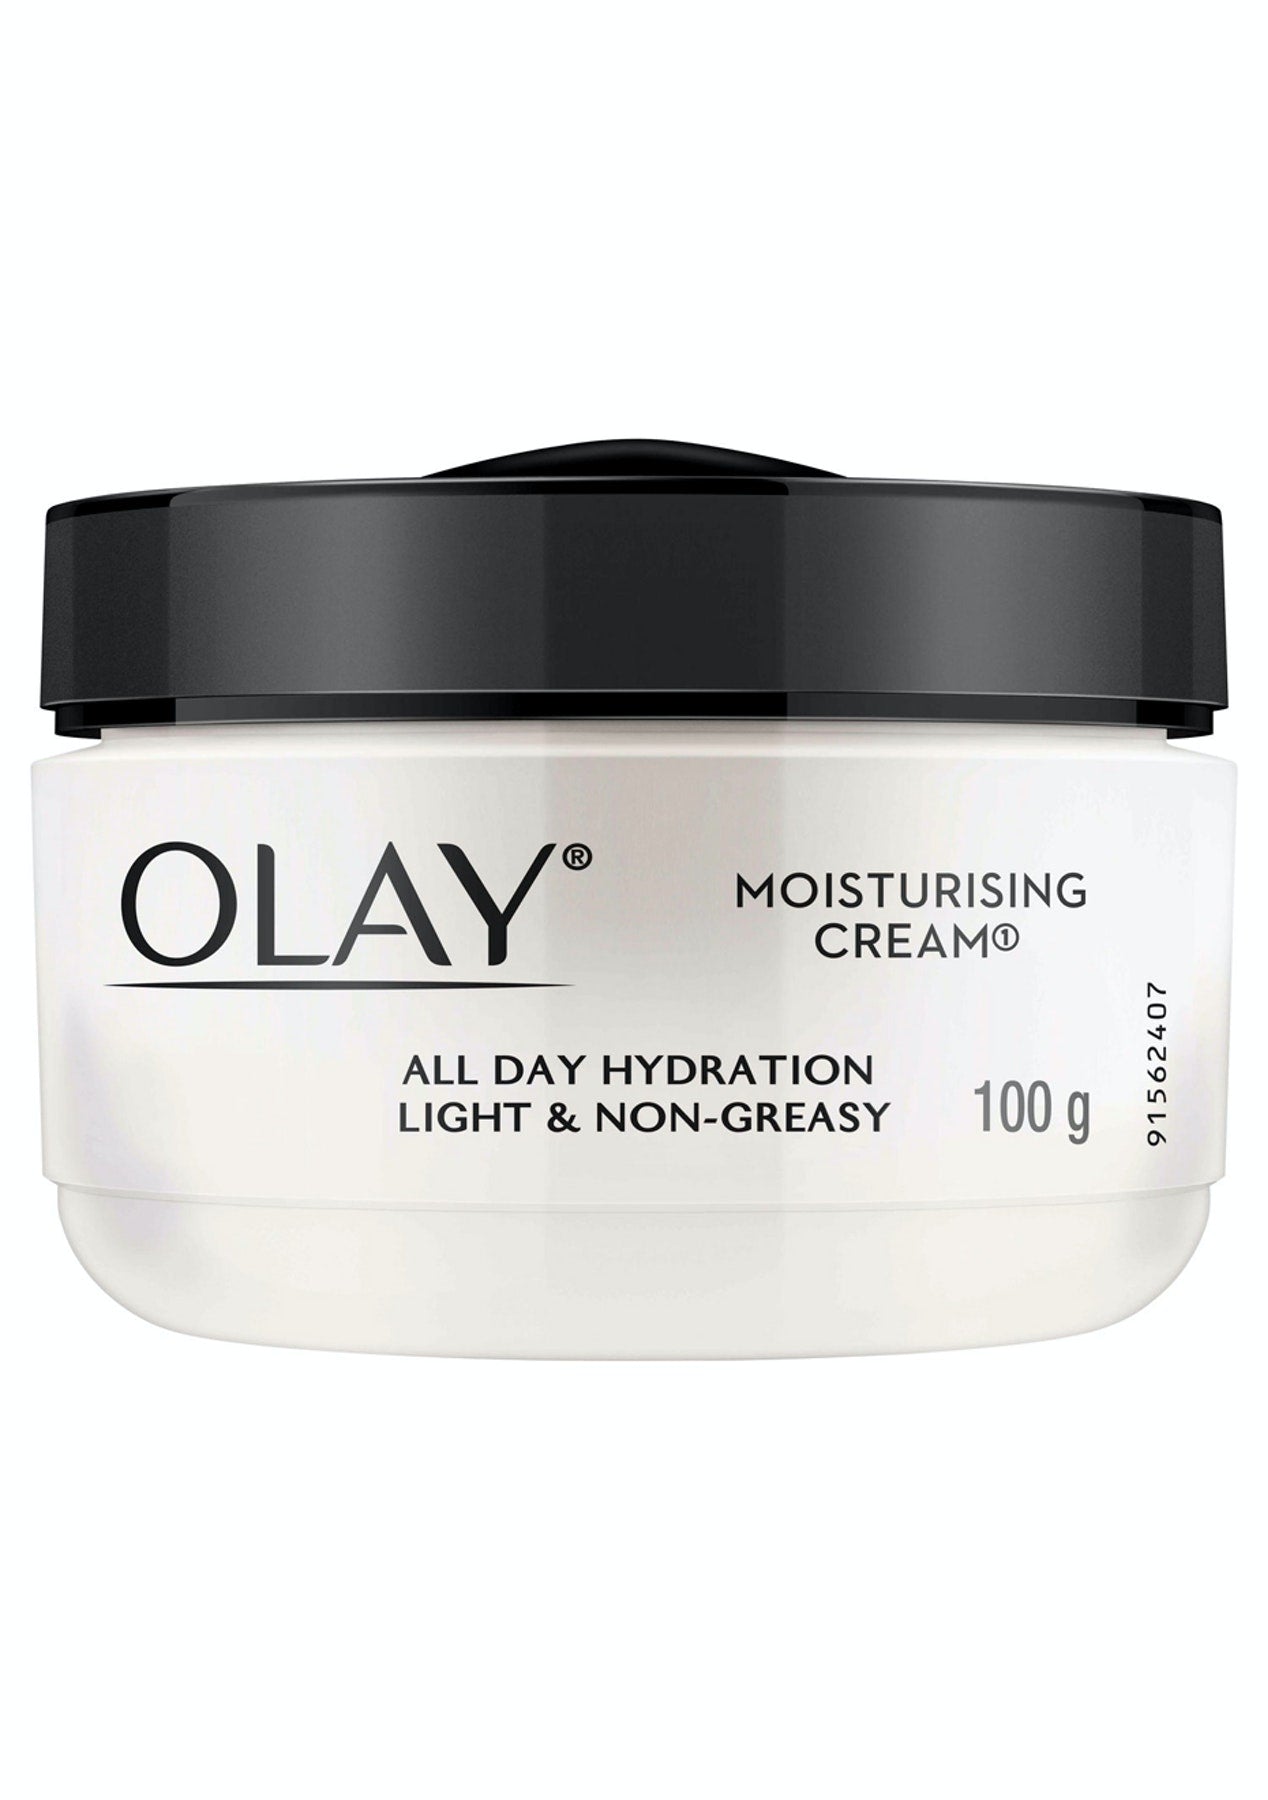 Olay Classic Moisturising Cream 100g